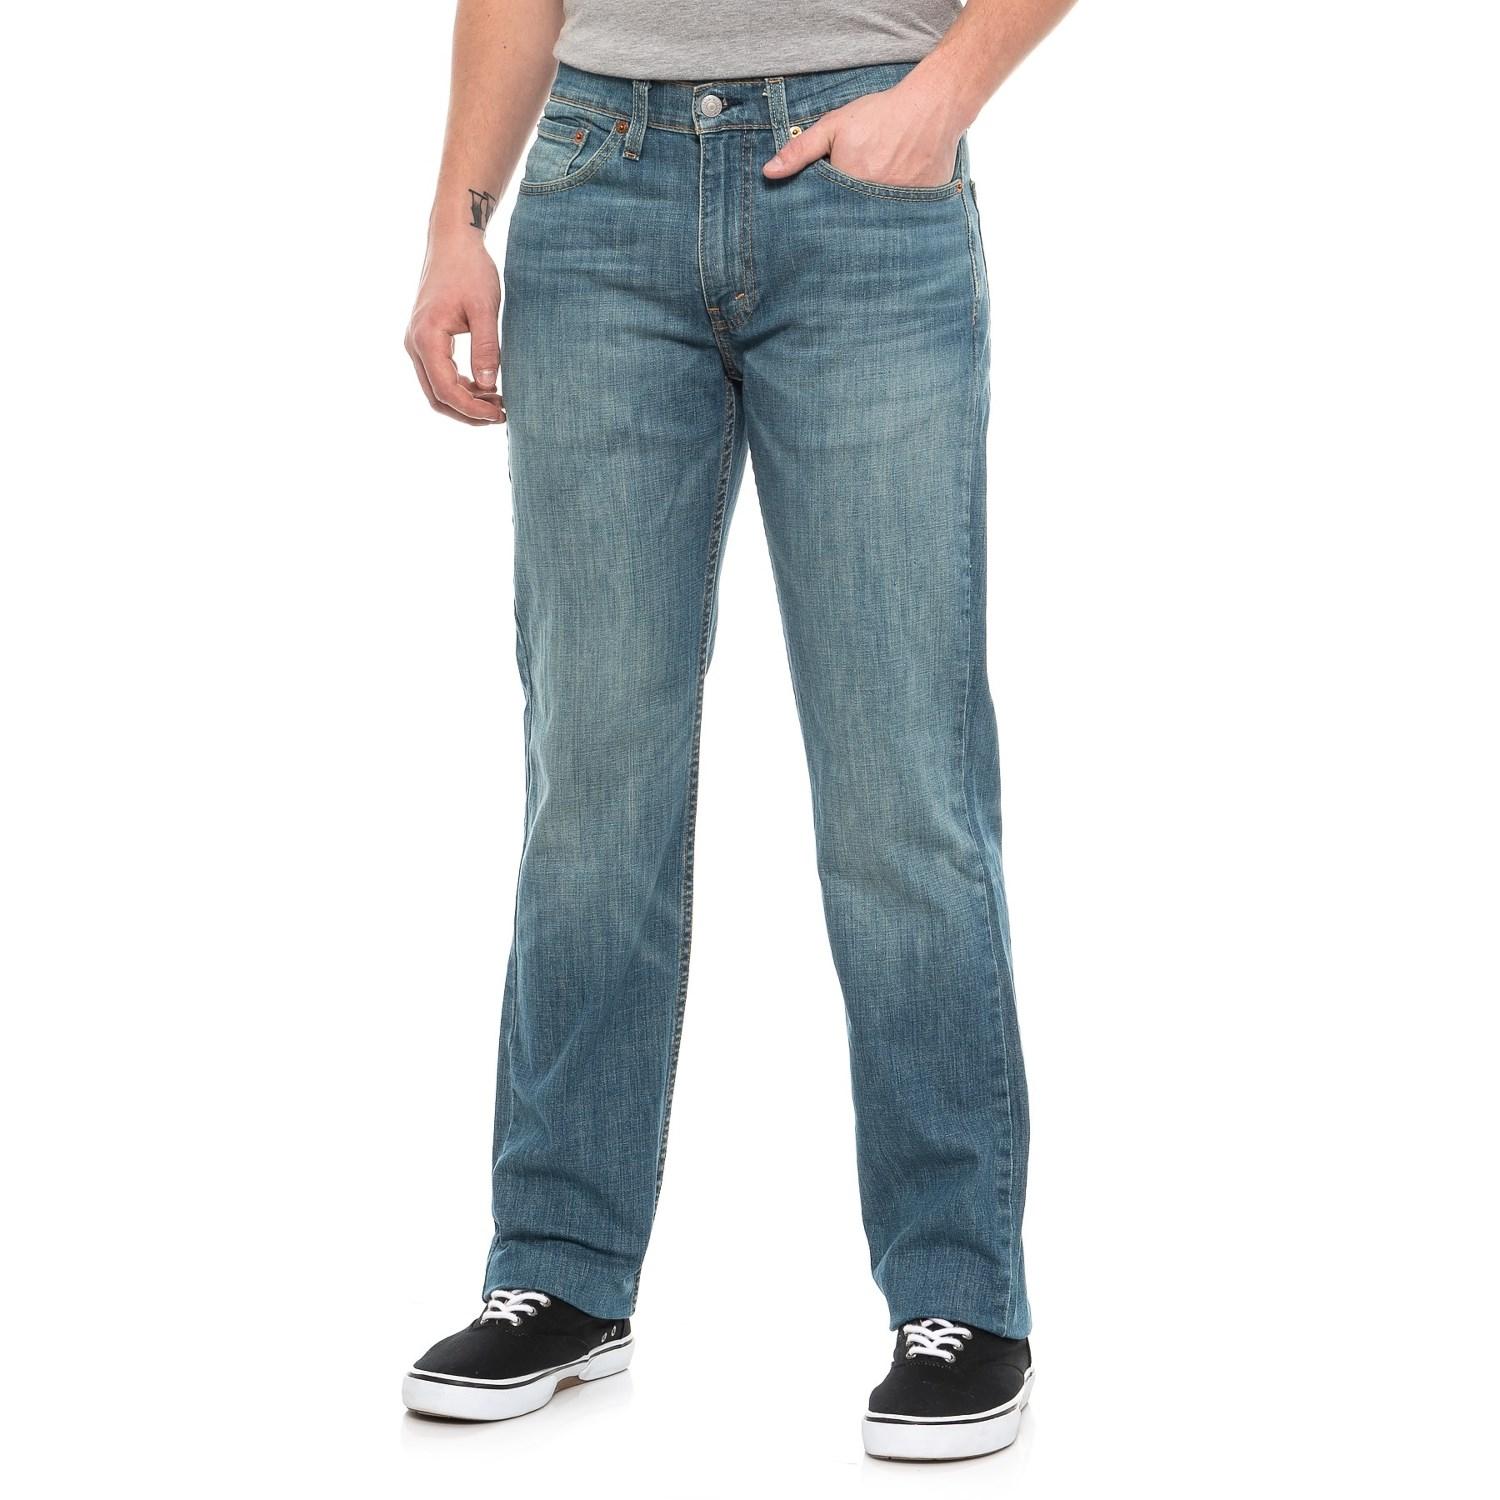 Levi's Denim 514 Straight Leg Stretch Jeans in Blue for Men - Lyst